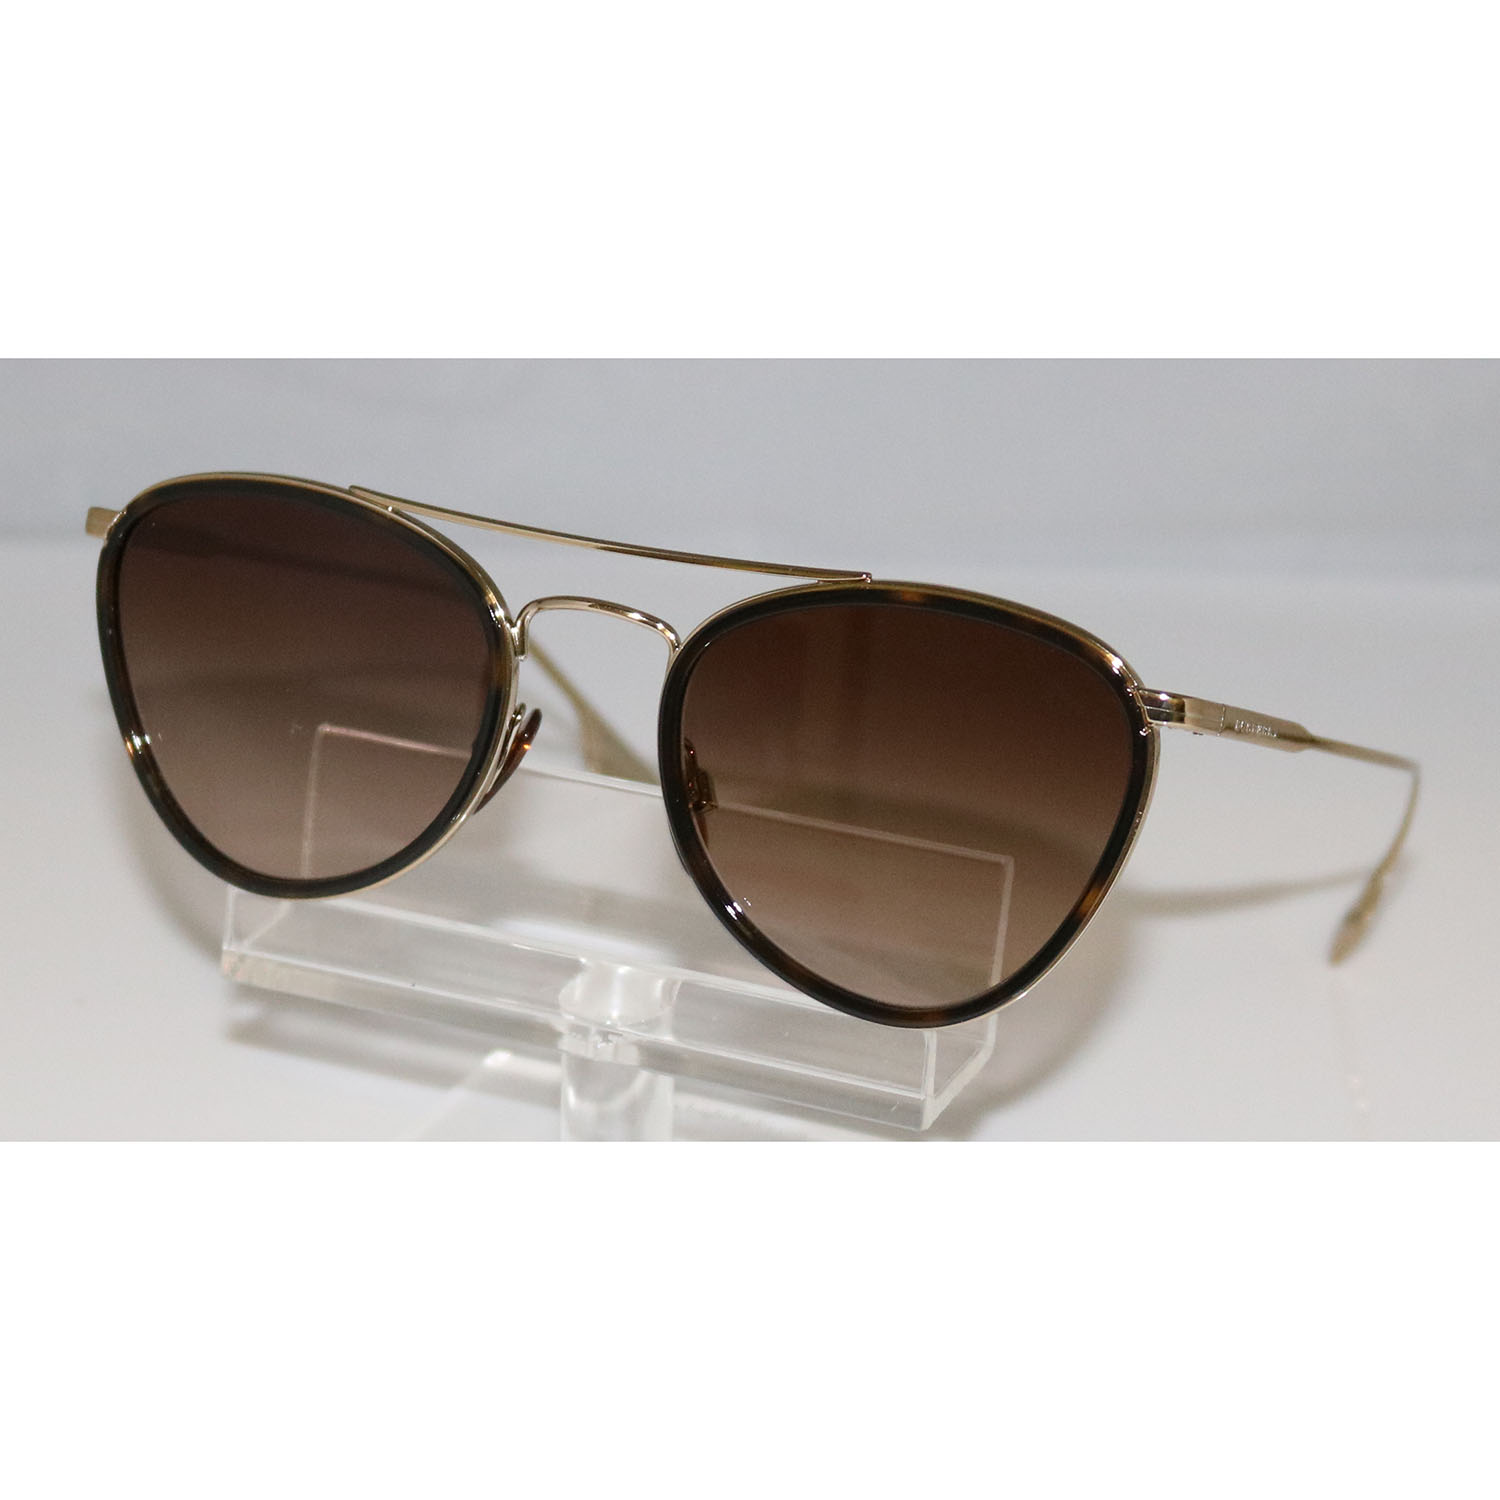 Burberry 3104 114513 Gold Sunglasses